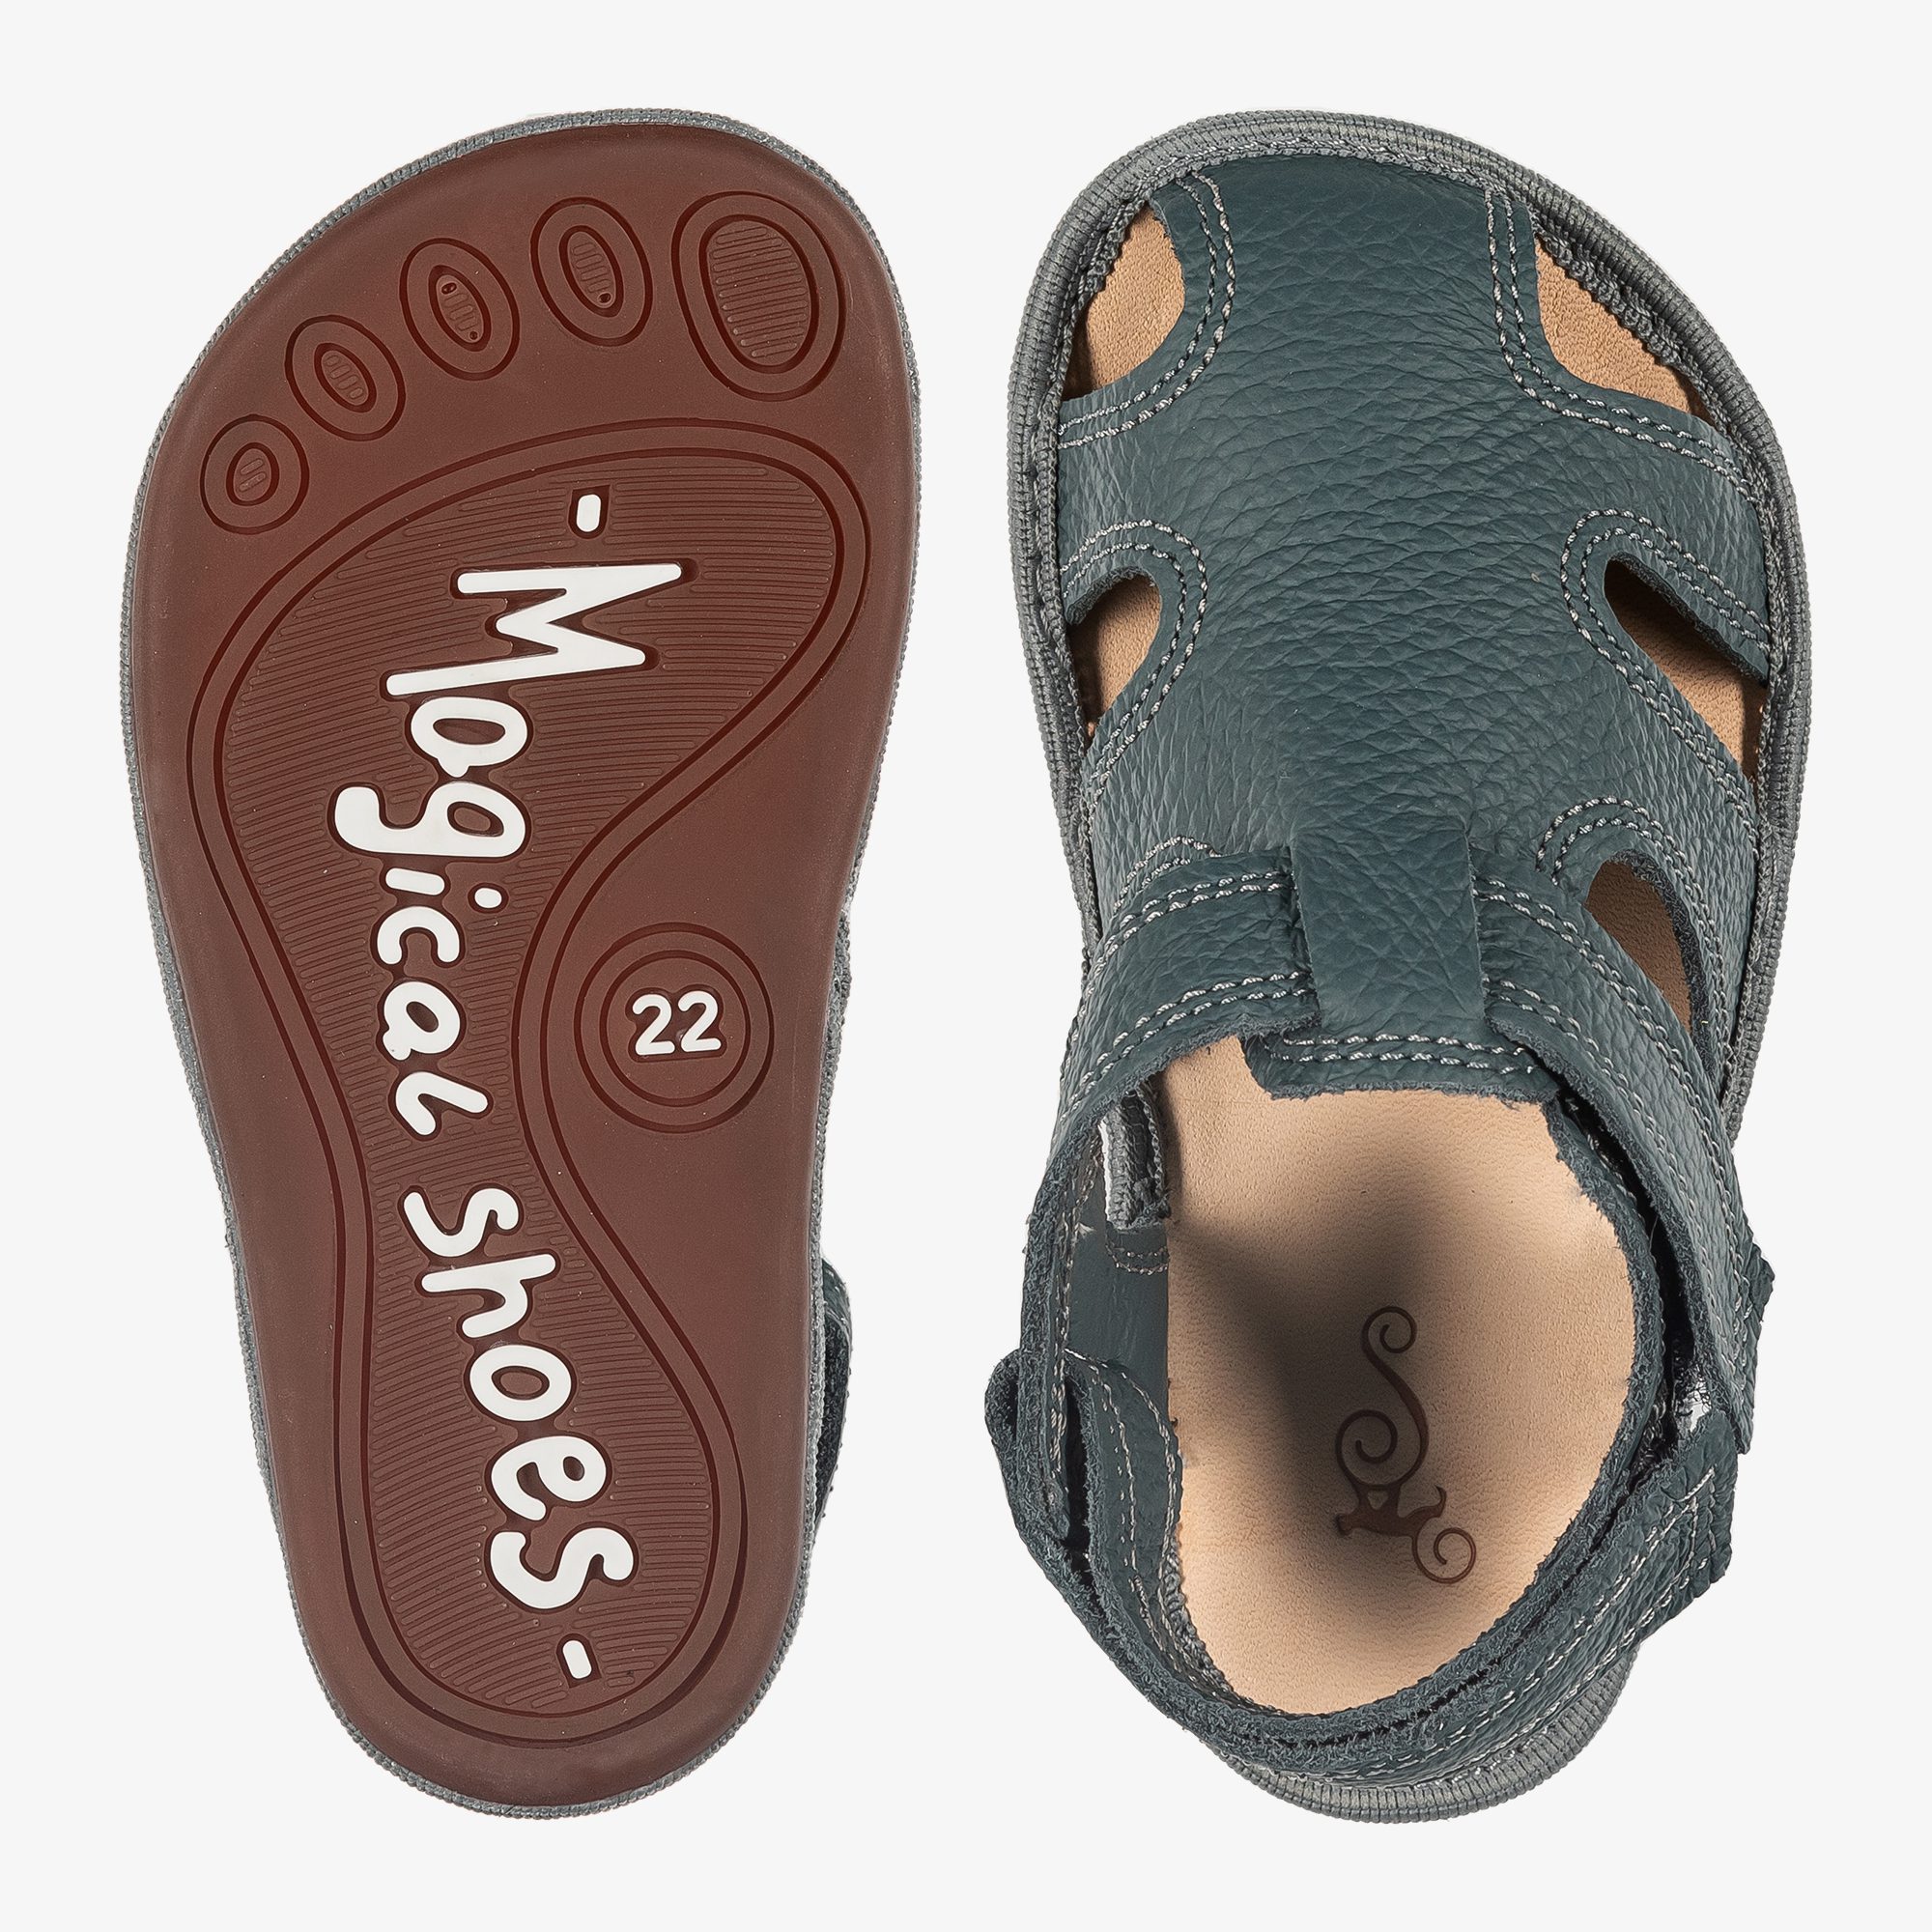 Sandals - Buy Sandals at Best Price in Pakistan | www.daraz.pk